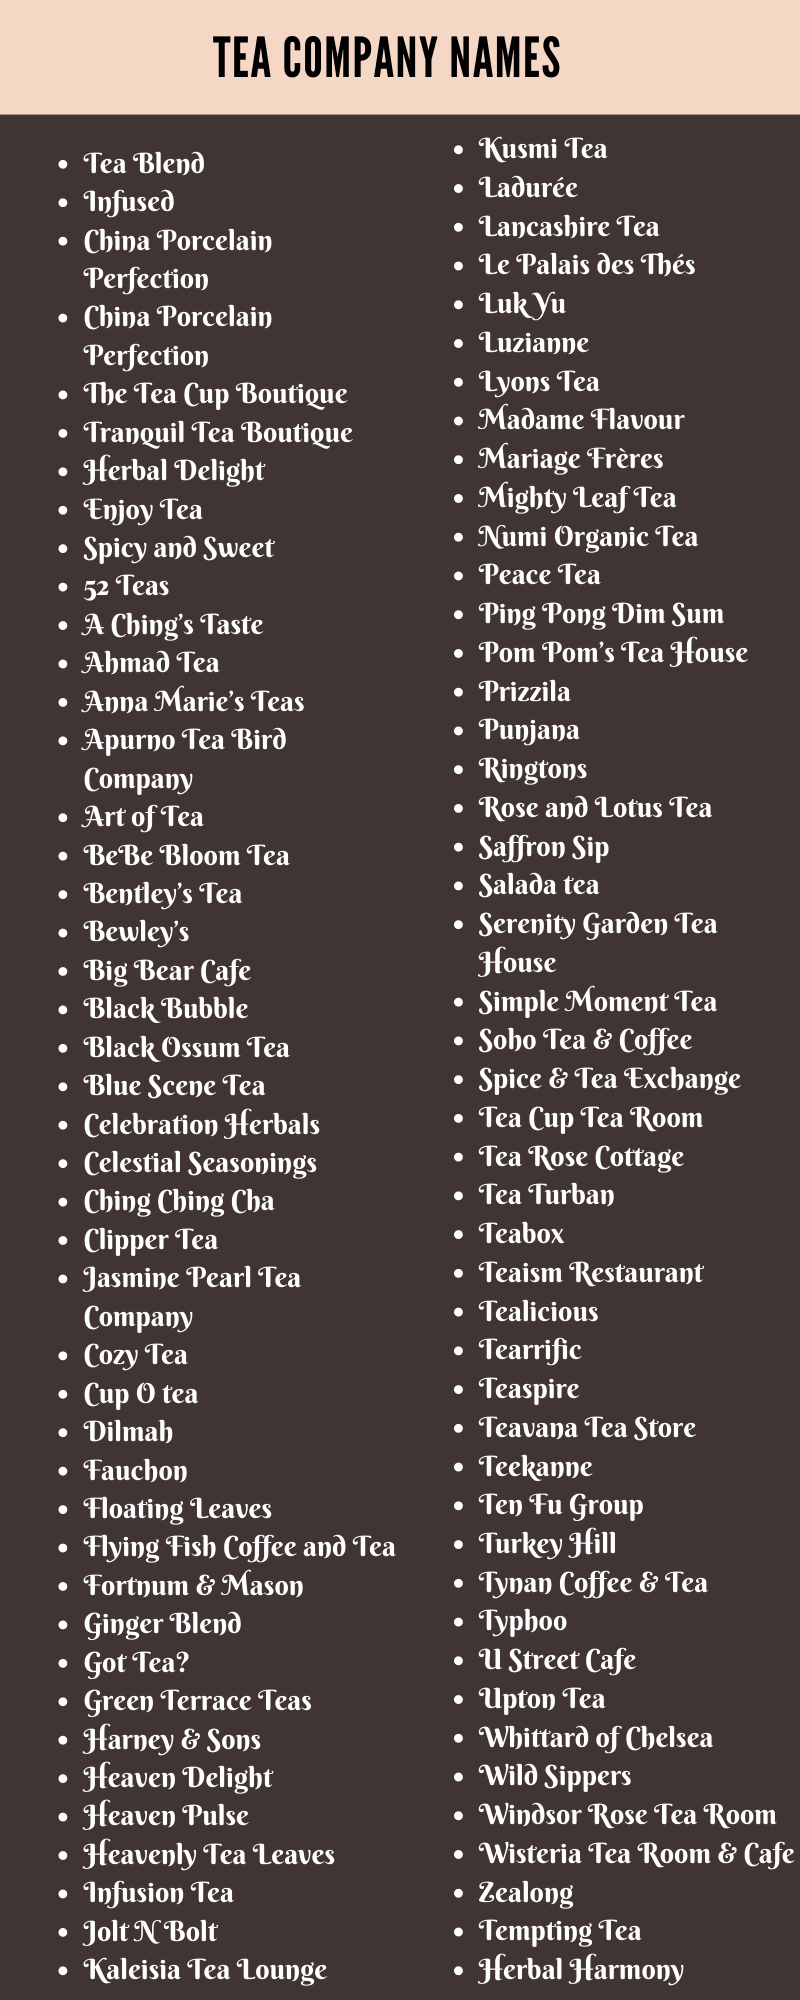 Tea Company Names 